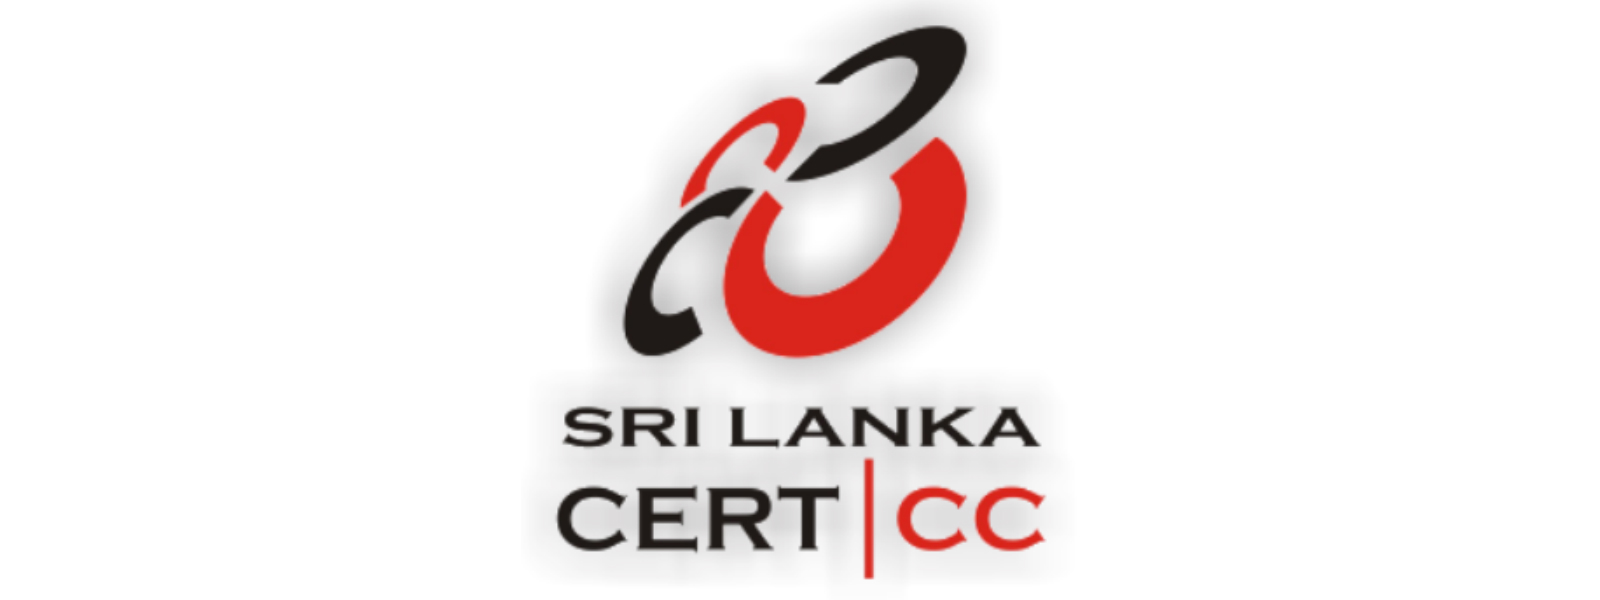  Several Sri Lankan websites hacked